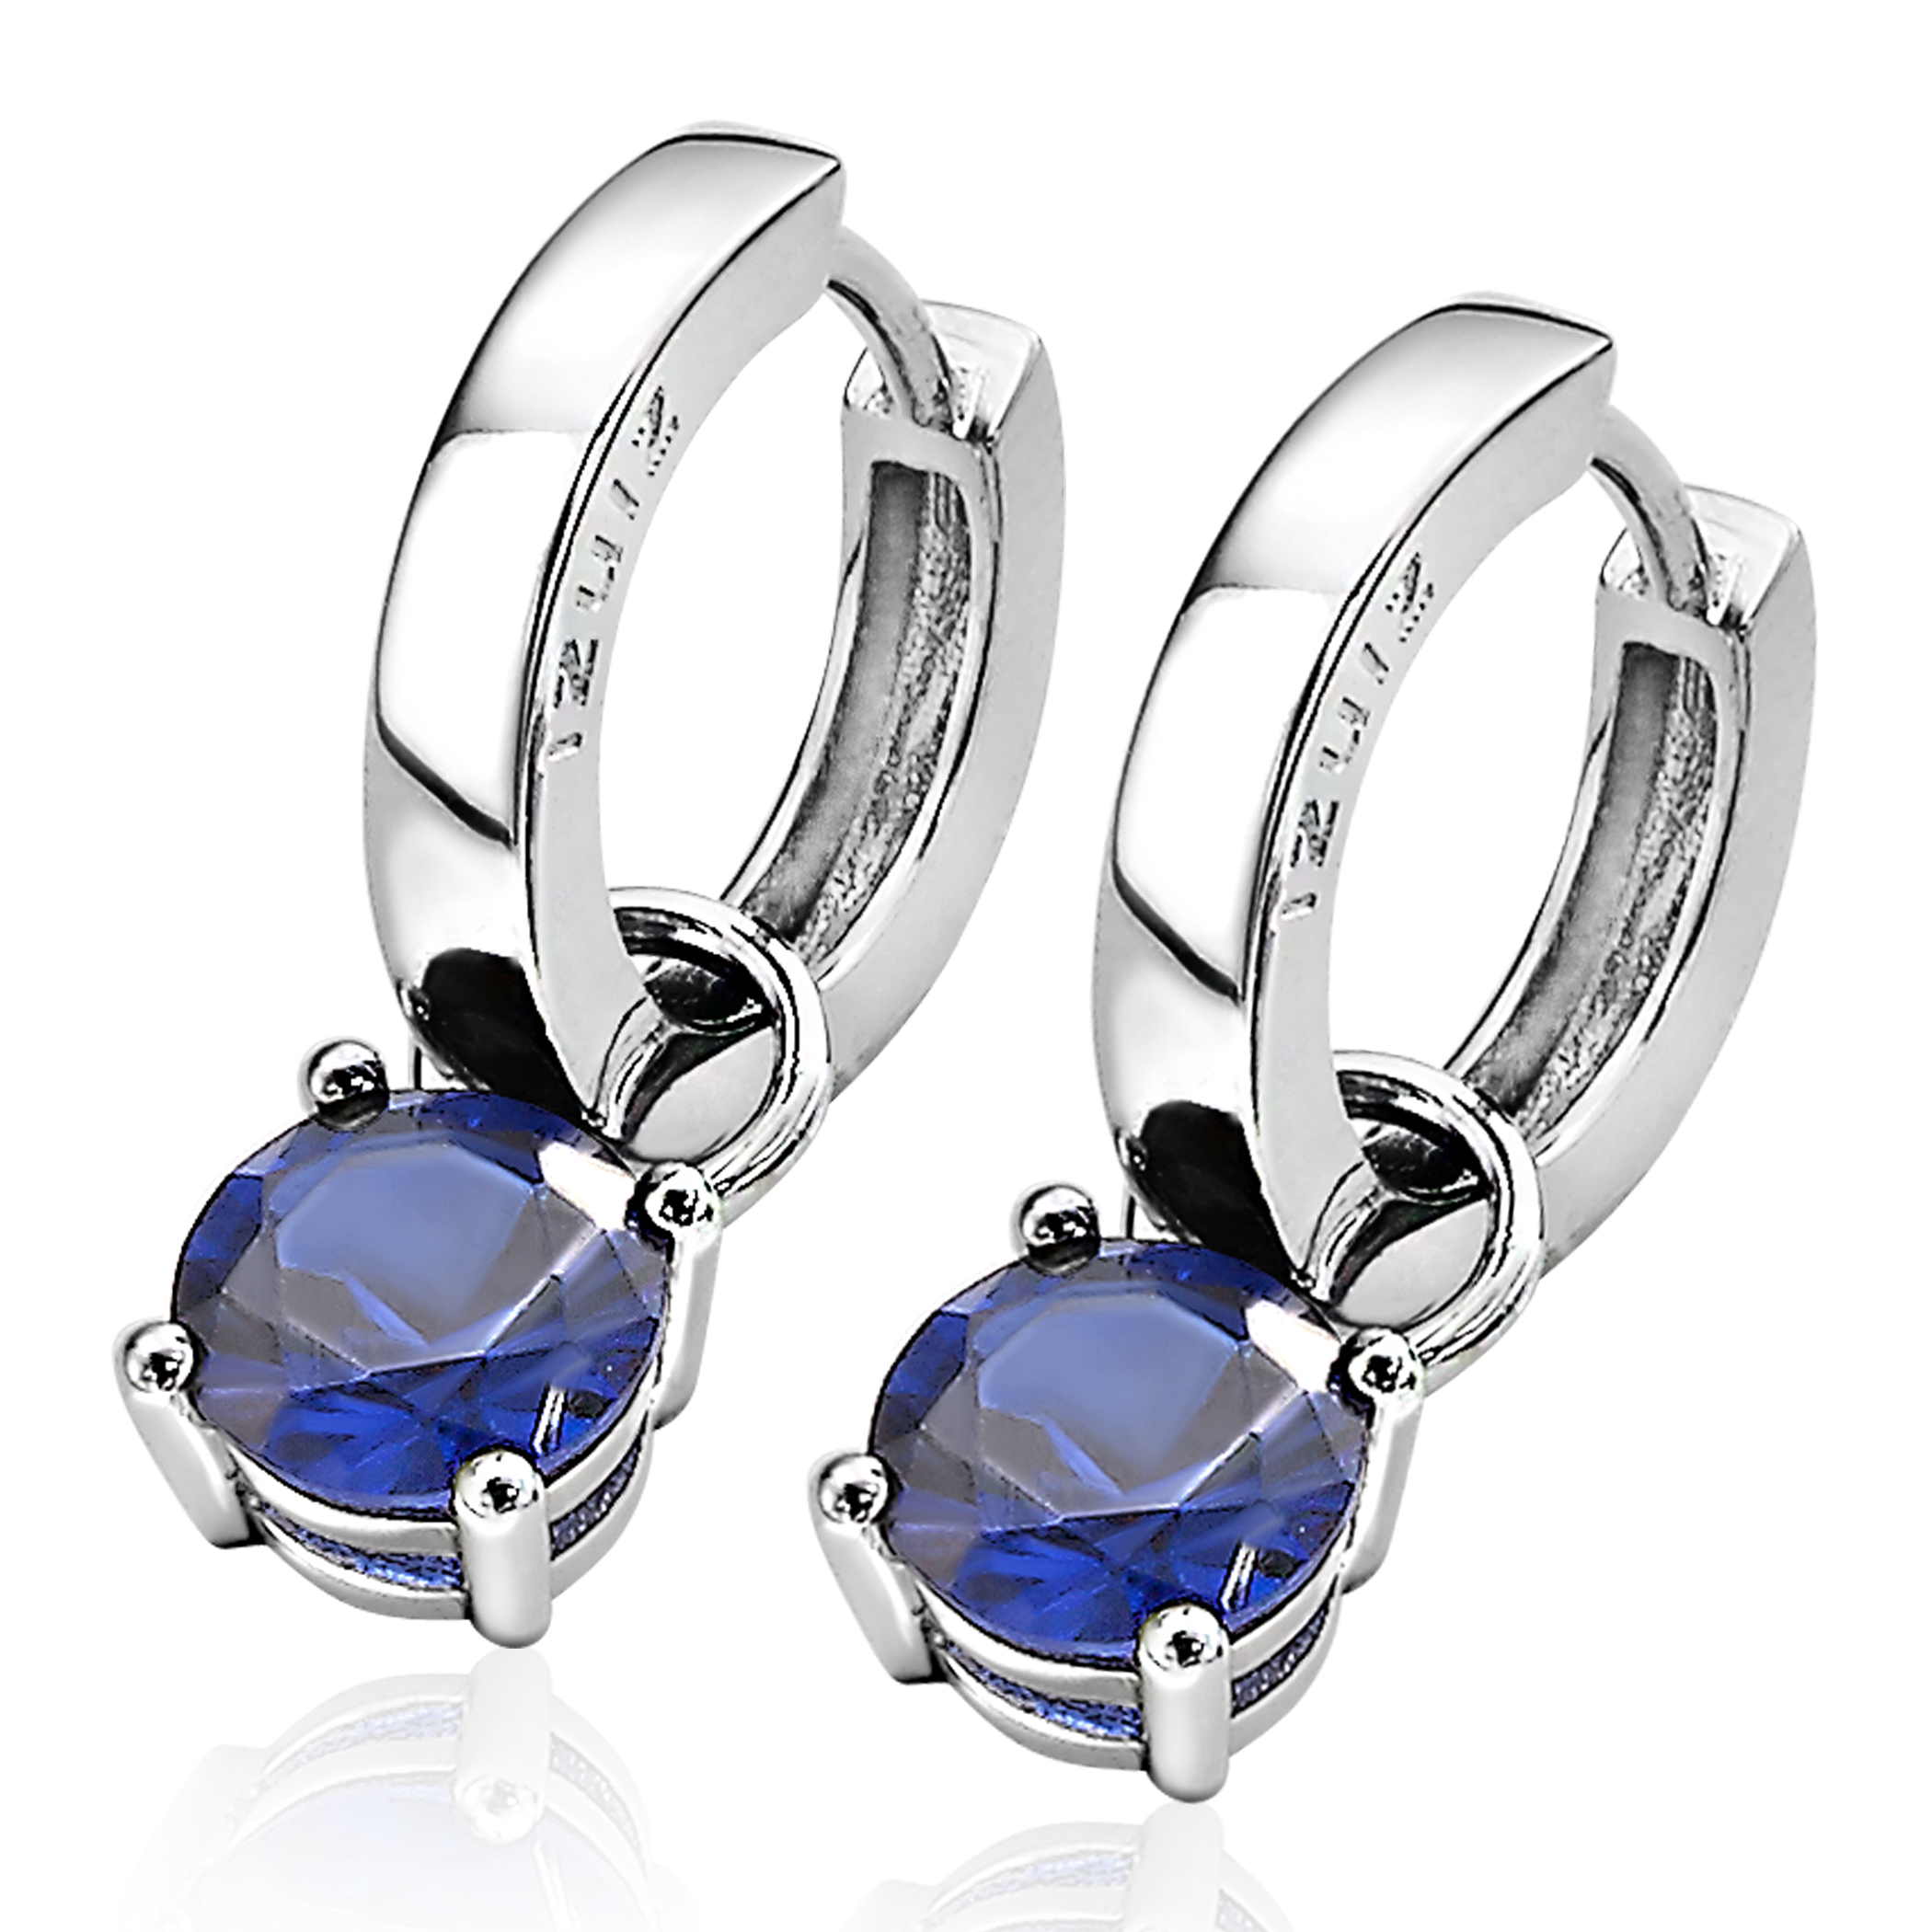 ZINZI Sterling Silver Earrings Pendants Round Dark Blue ZICH1300Q (excl. hoop earrings)